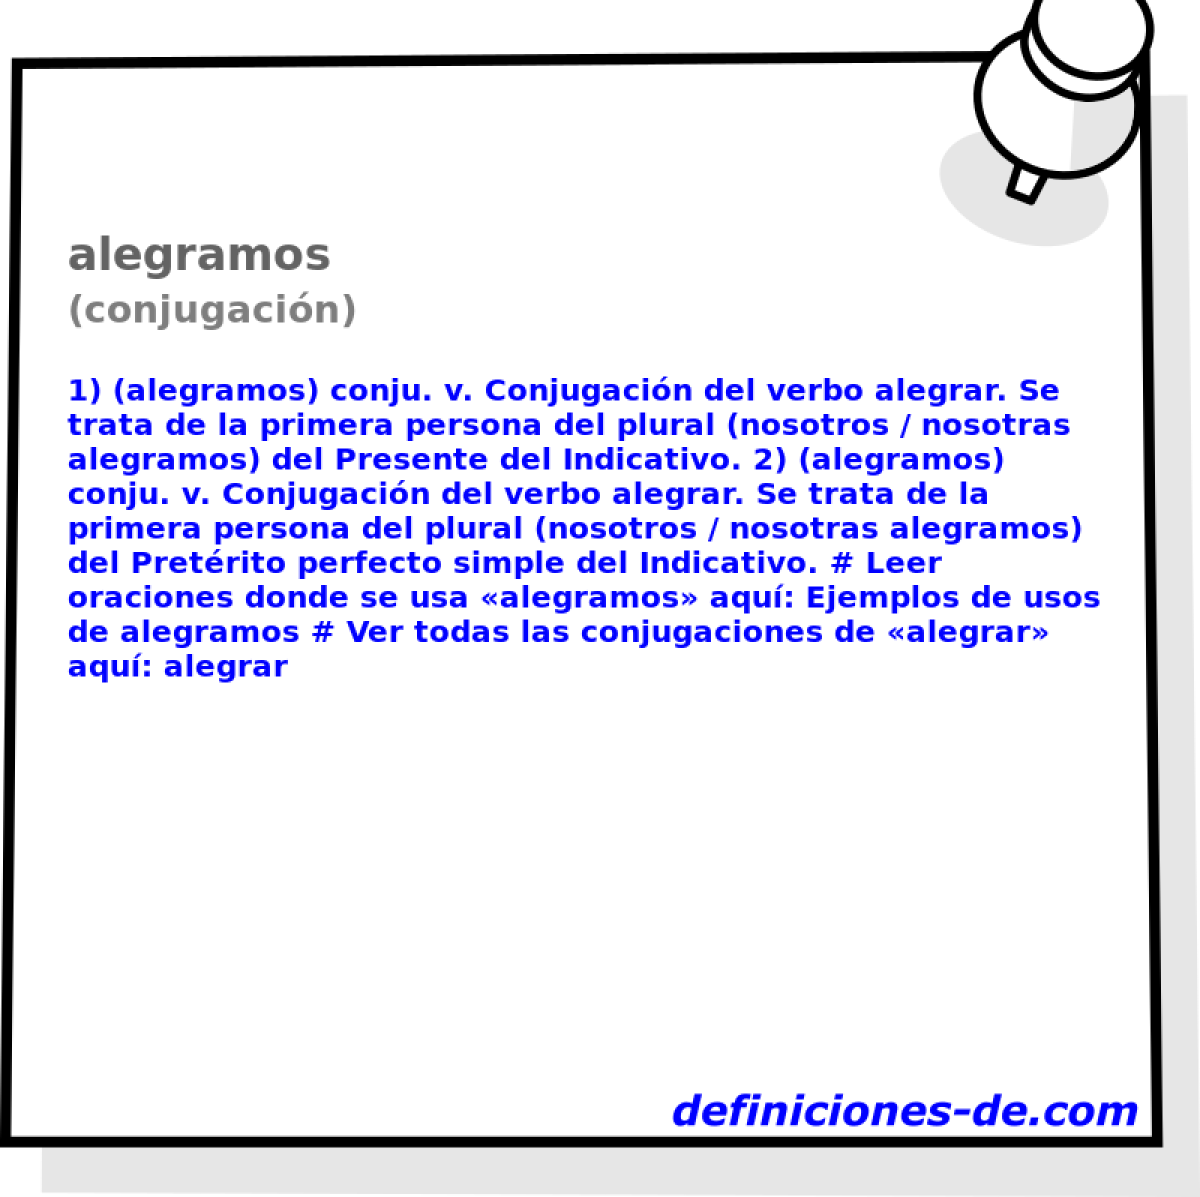 alegramos (conjugacin)